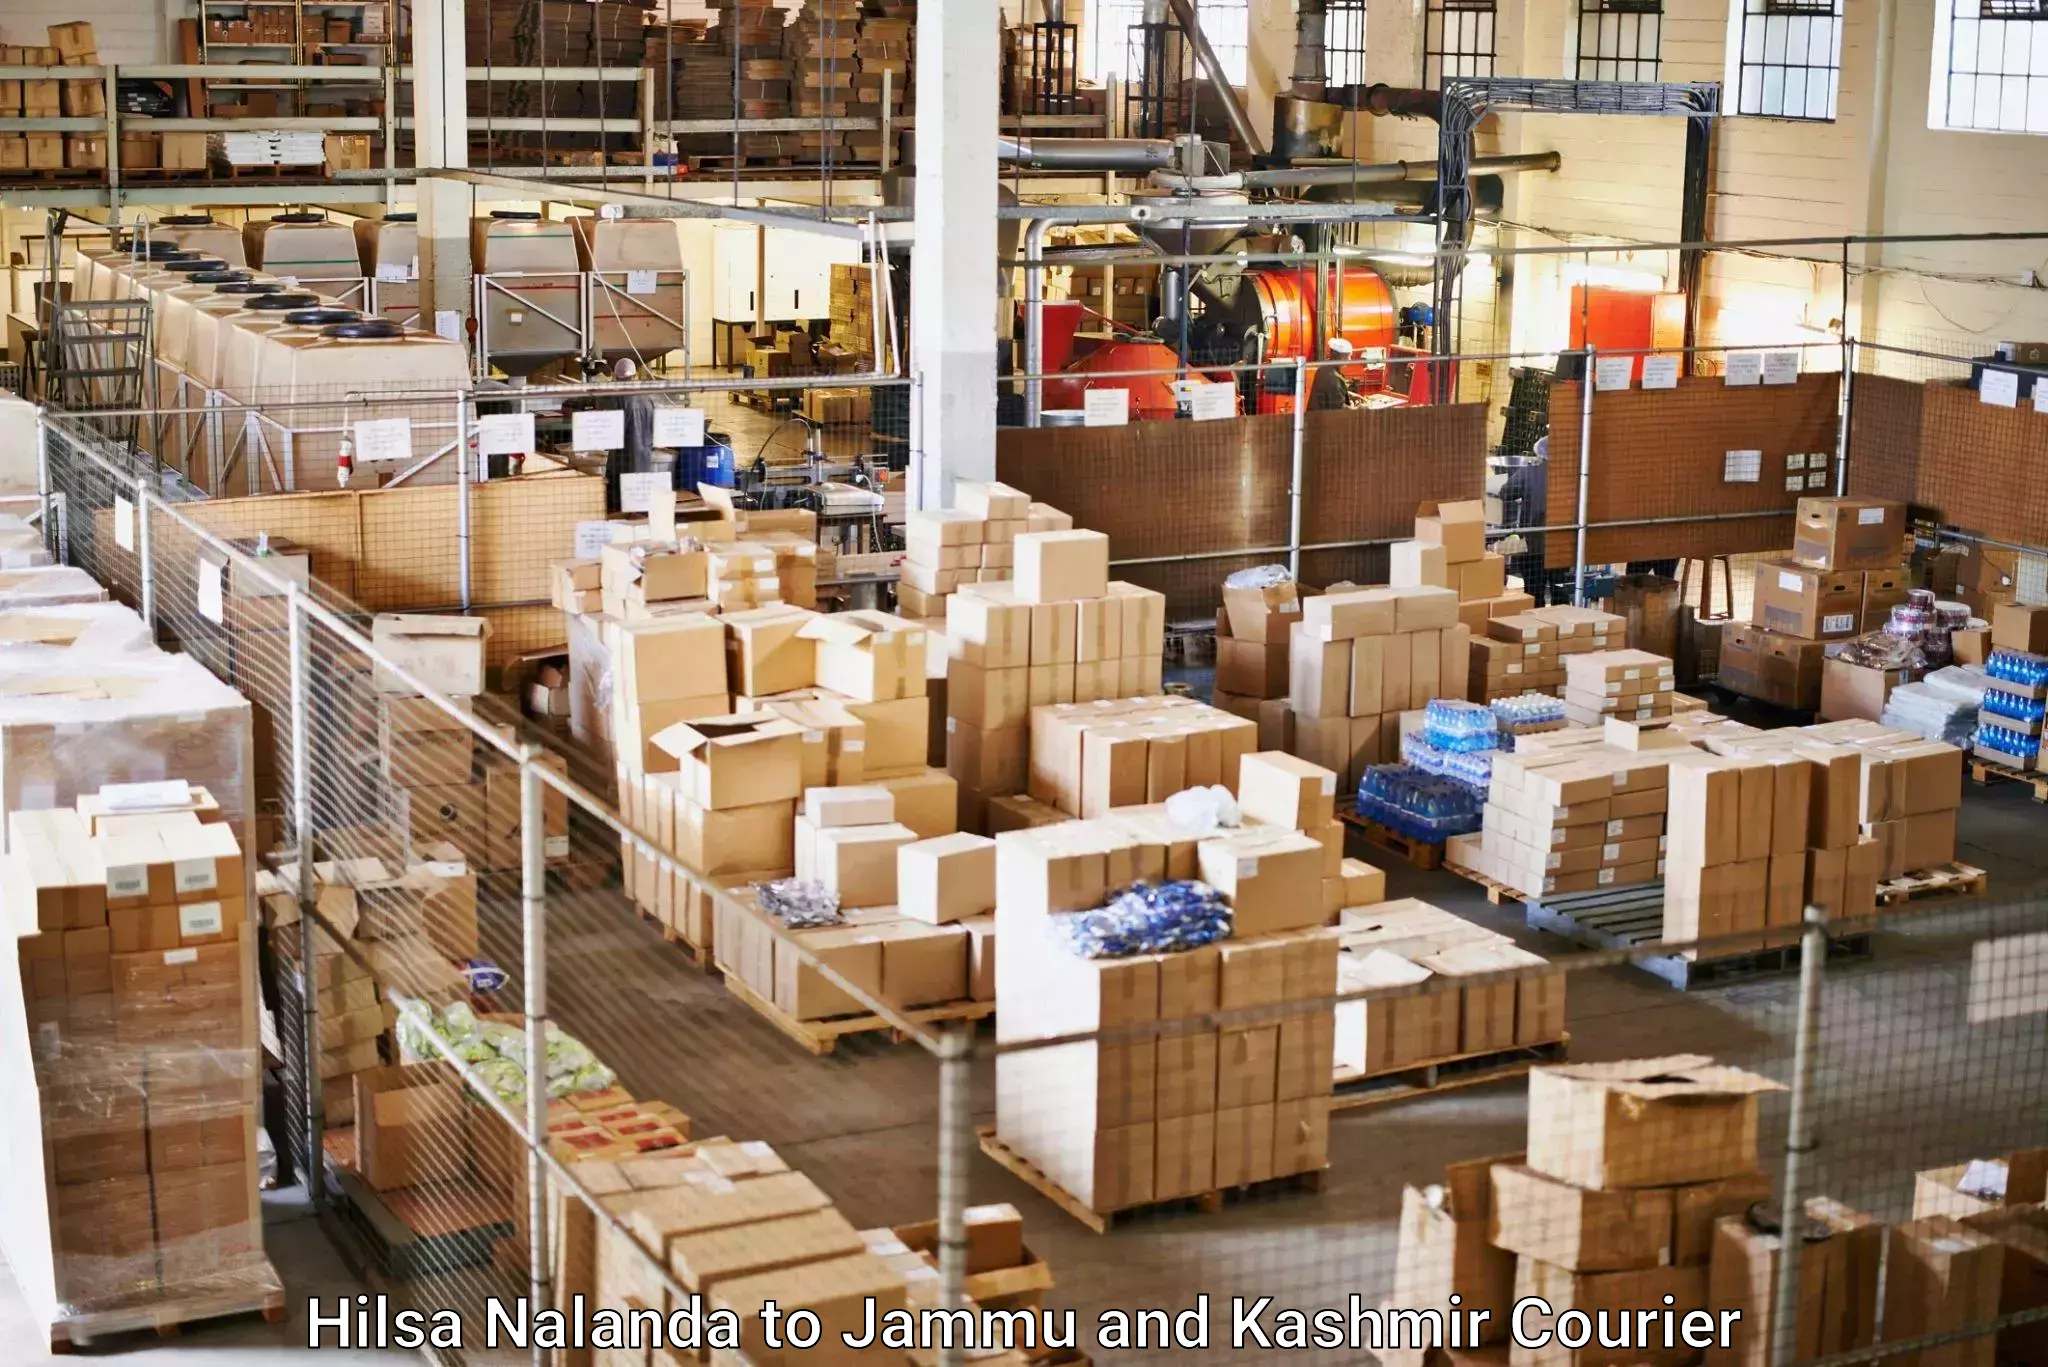 Round-the-clock parcel delivery Hilsa Nalanda to Katra